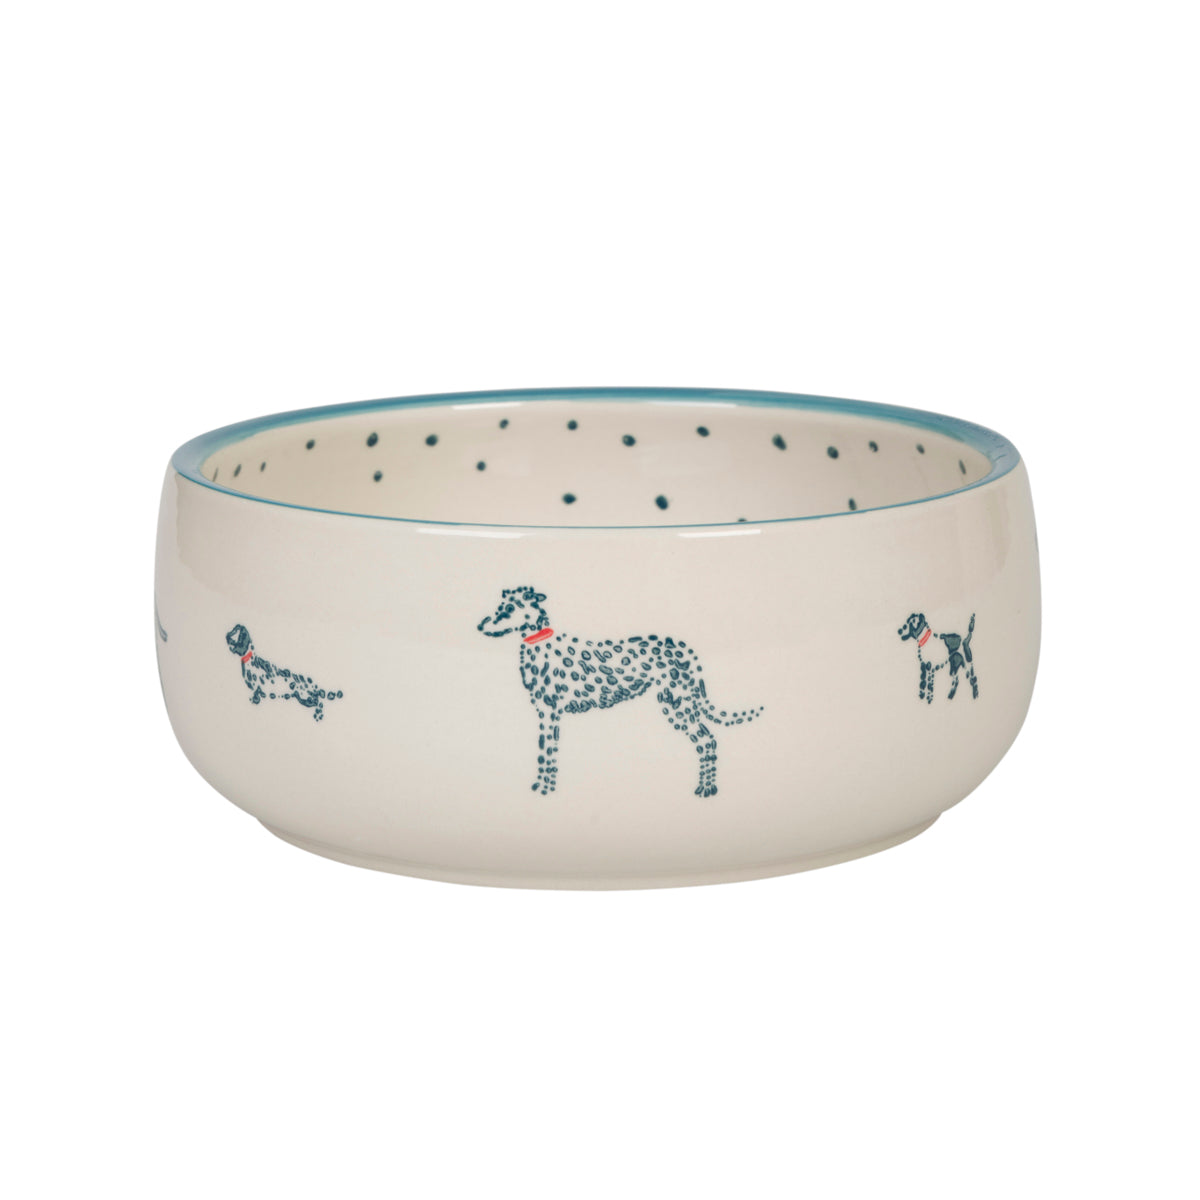 Fetch Stoneware Pet Bowl Medium by Sophie Allport